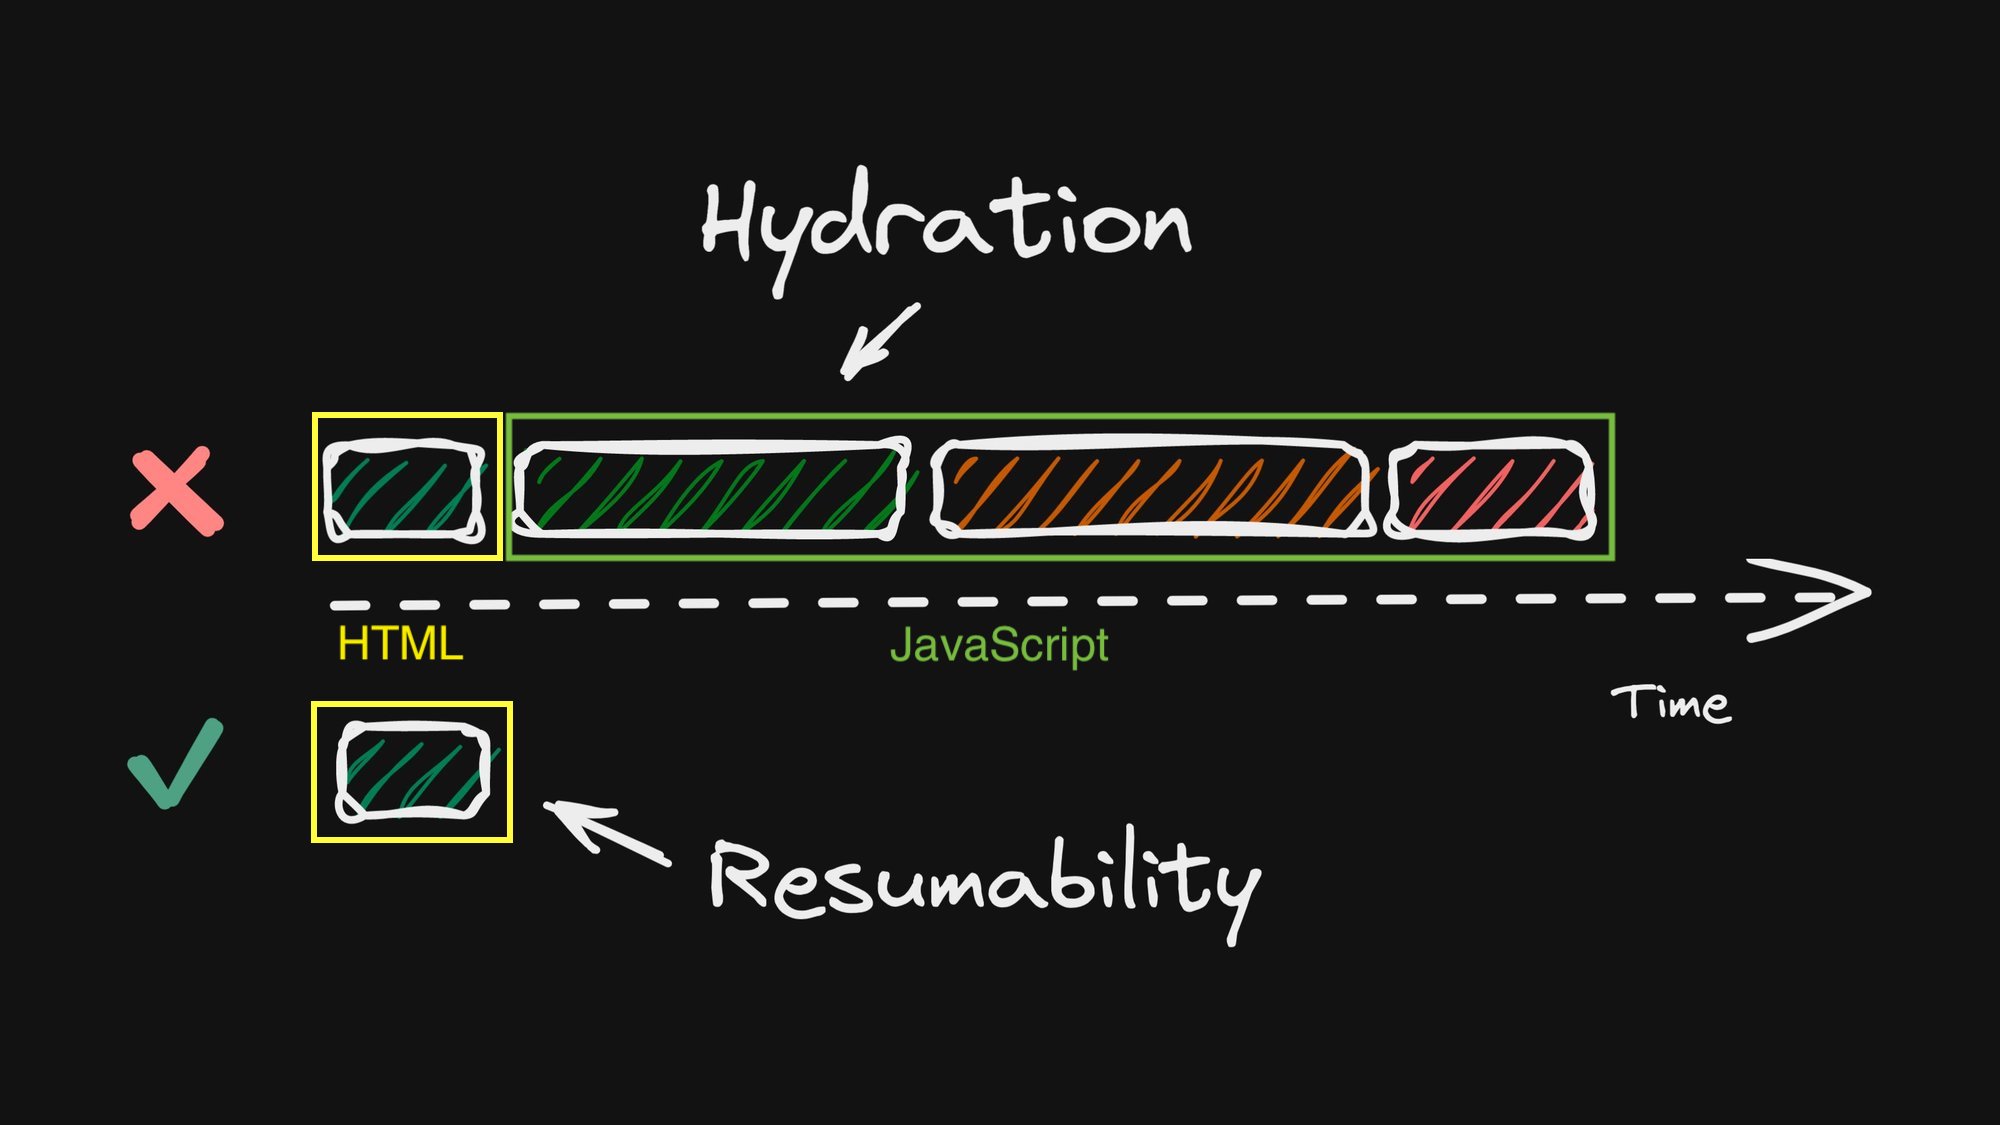 Hydration and Resumability